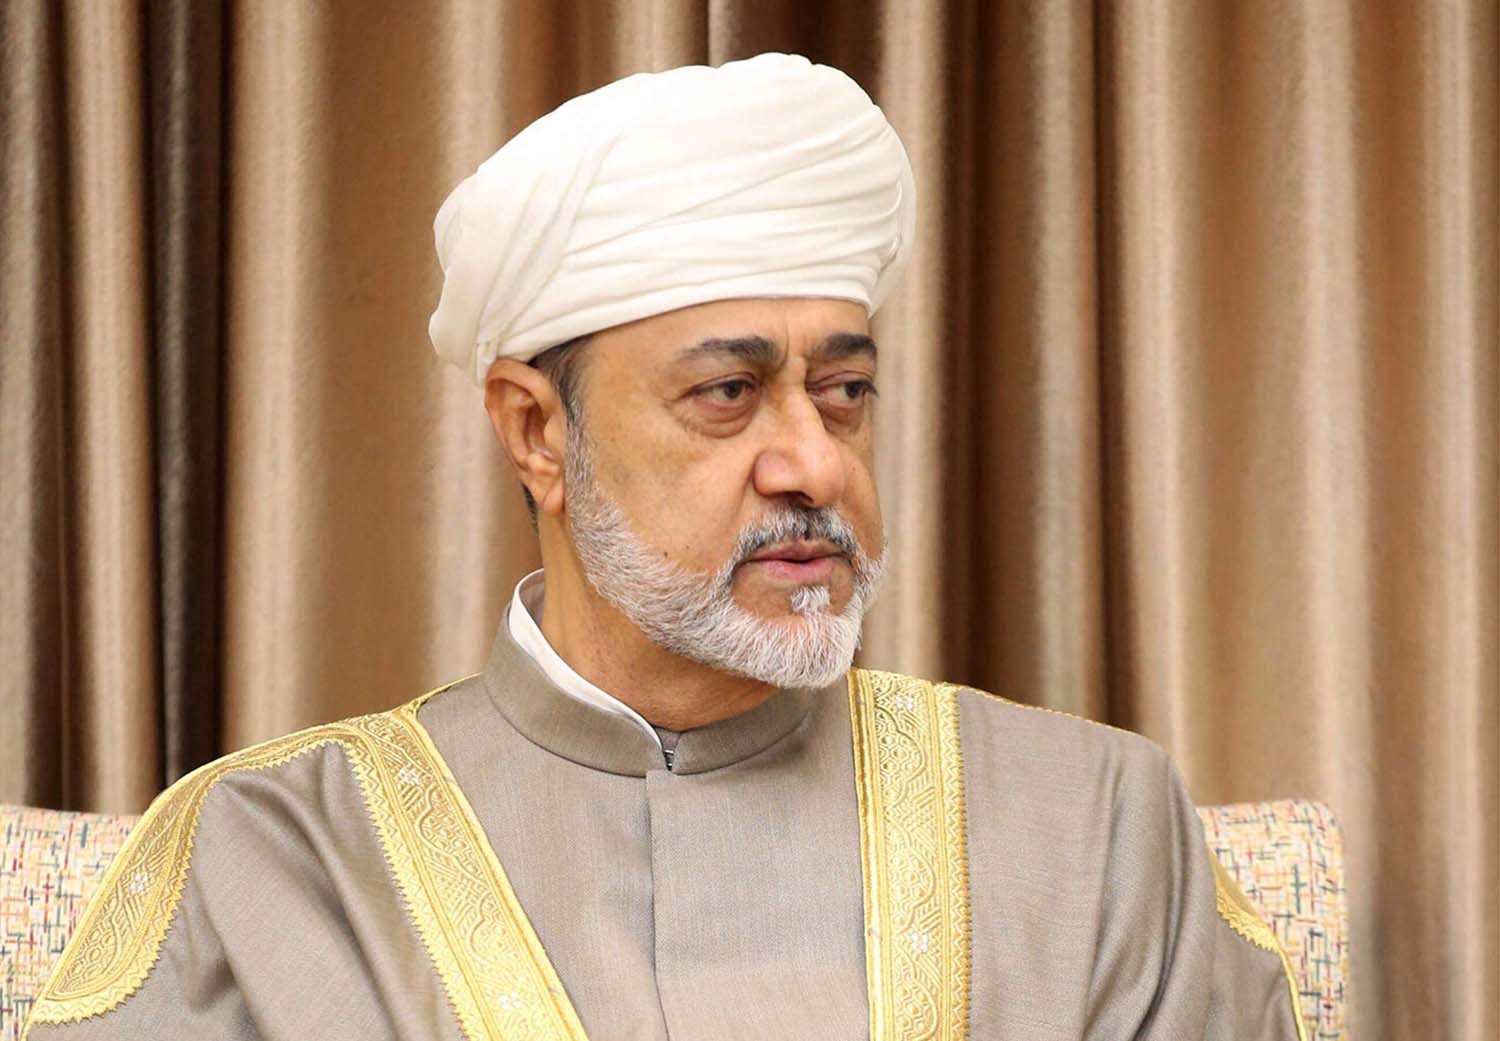 Decreed by Sultan Haitham bin Tariq al-Said